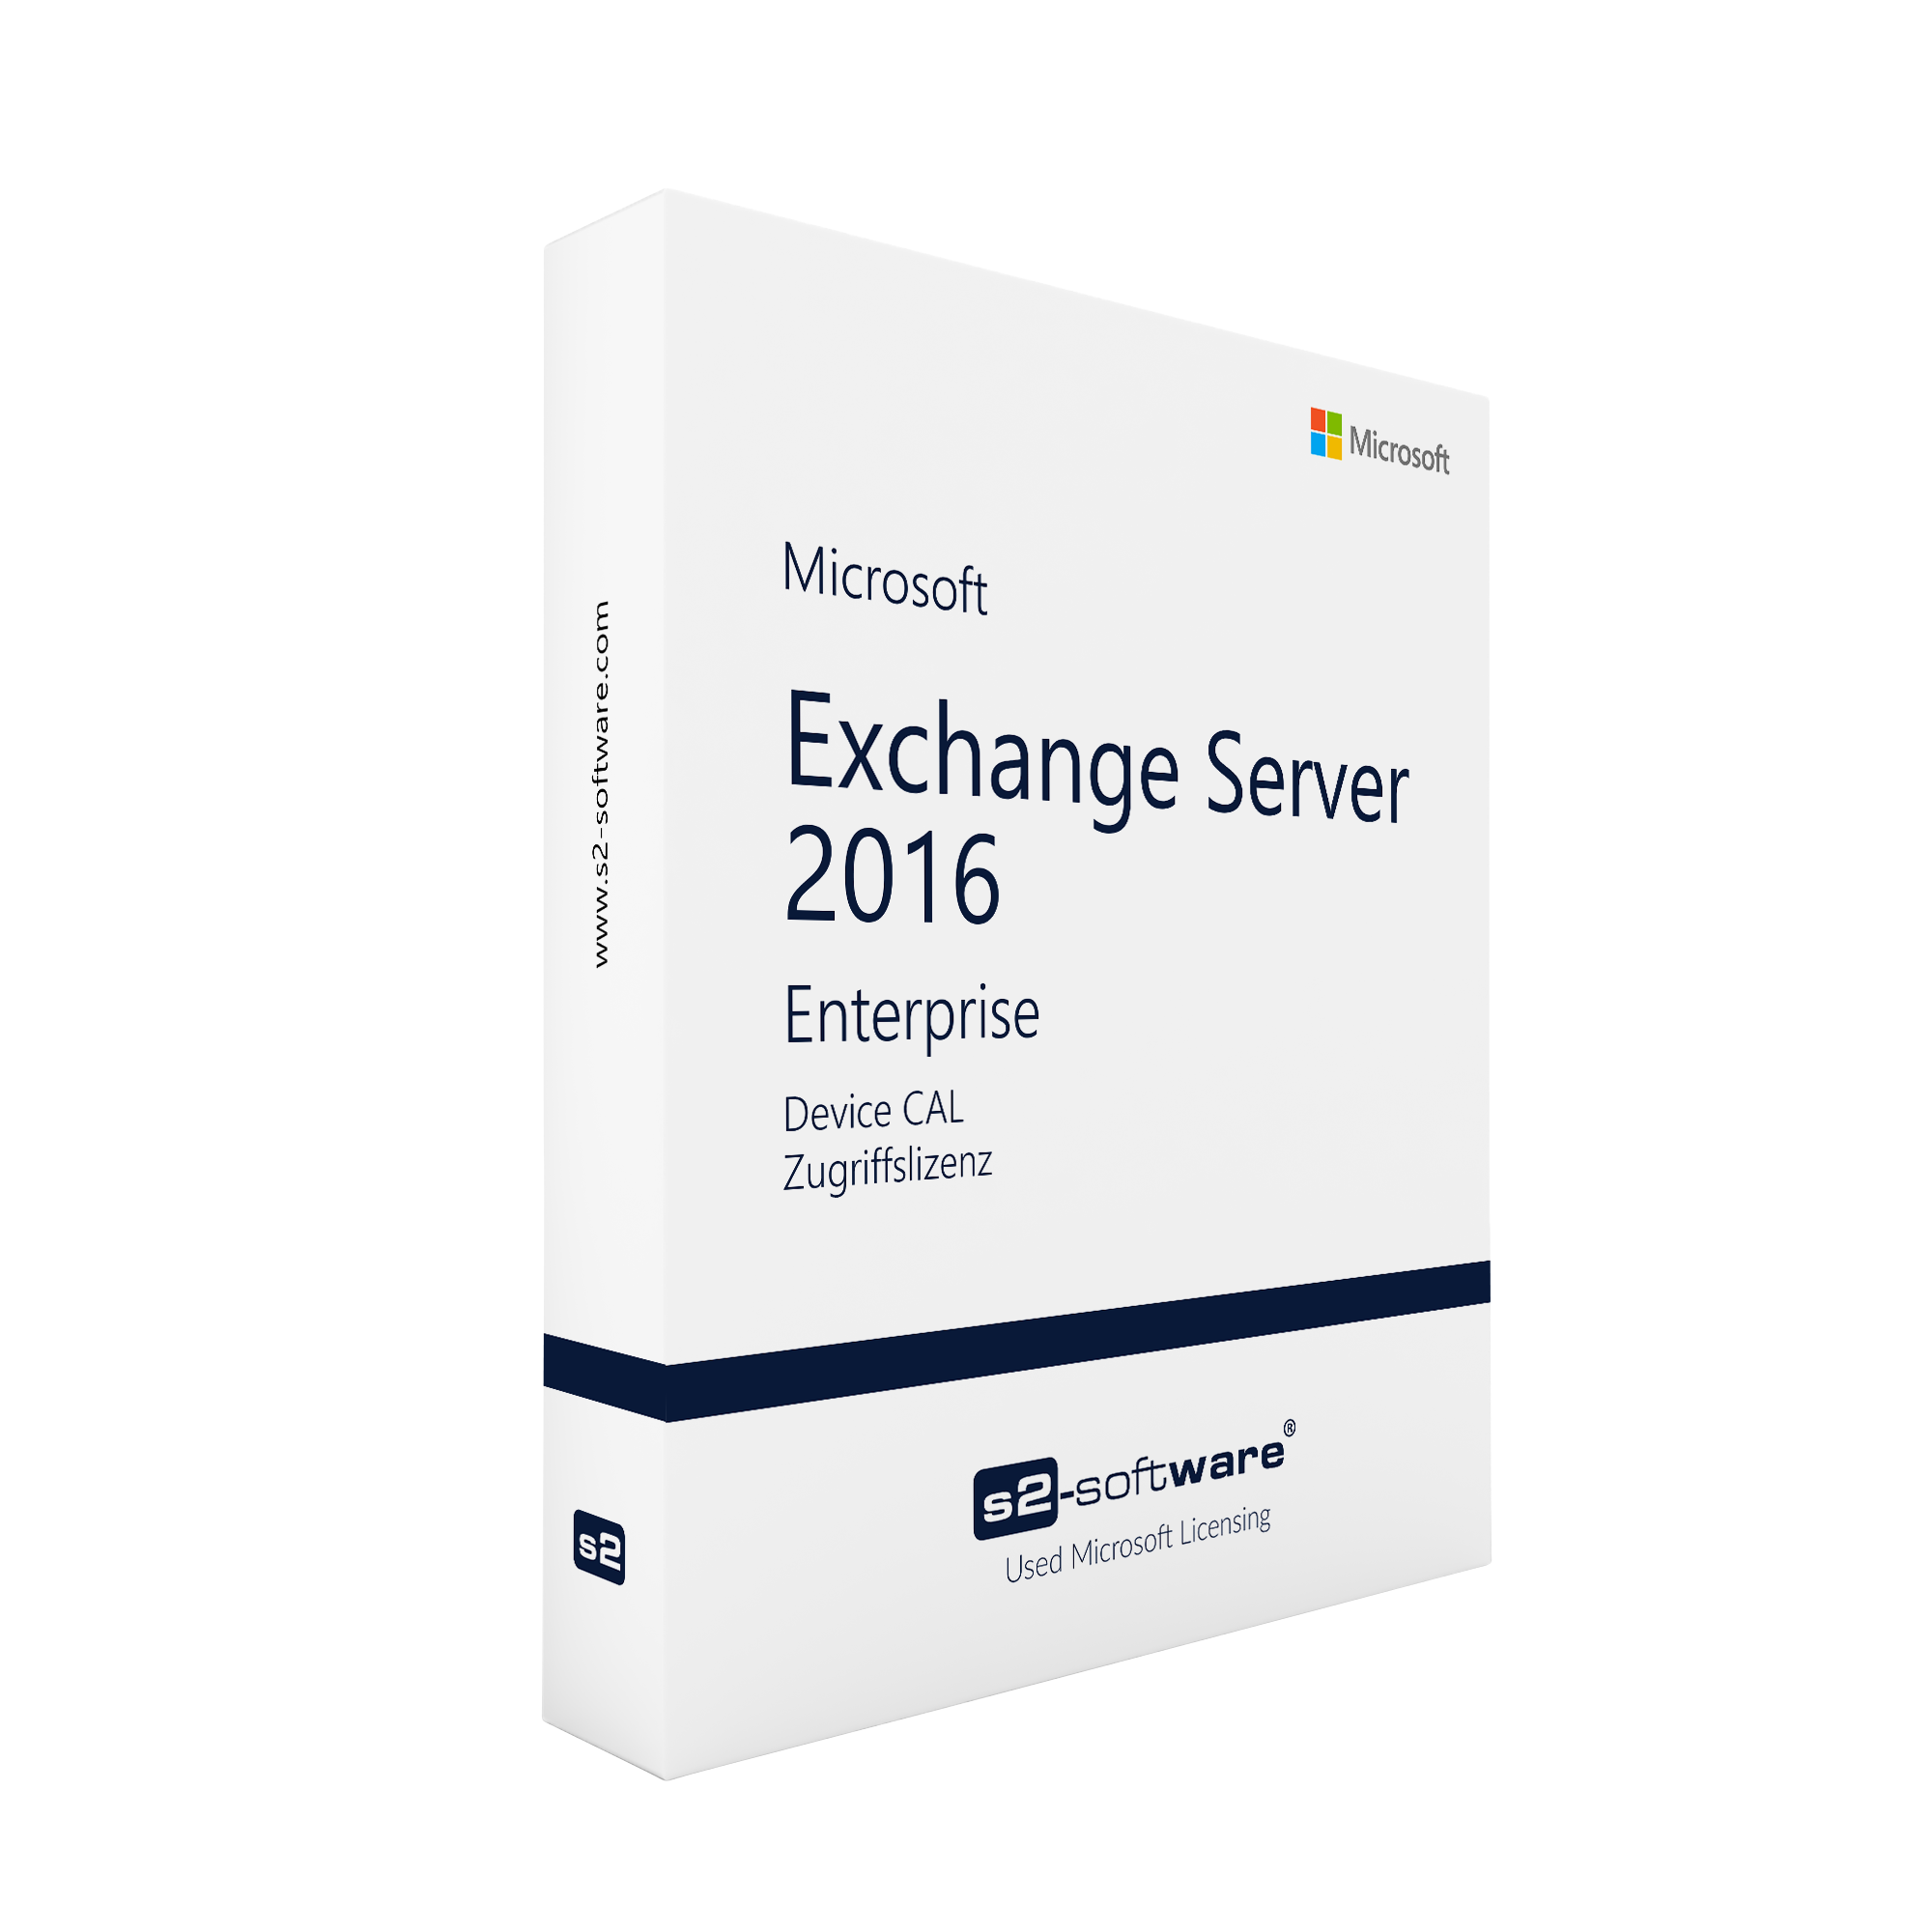 Exchange Server 2016 Enterprise Device CAL